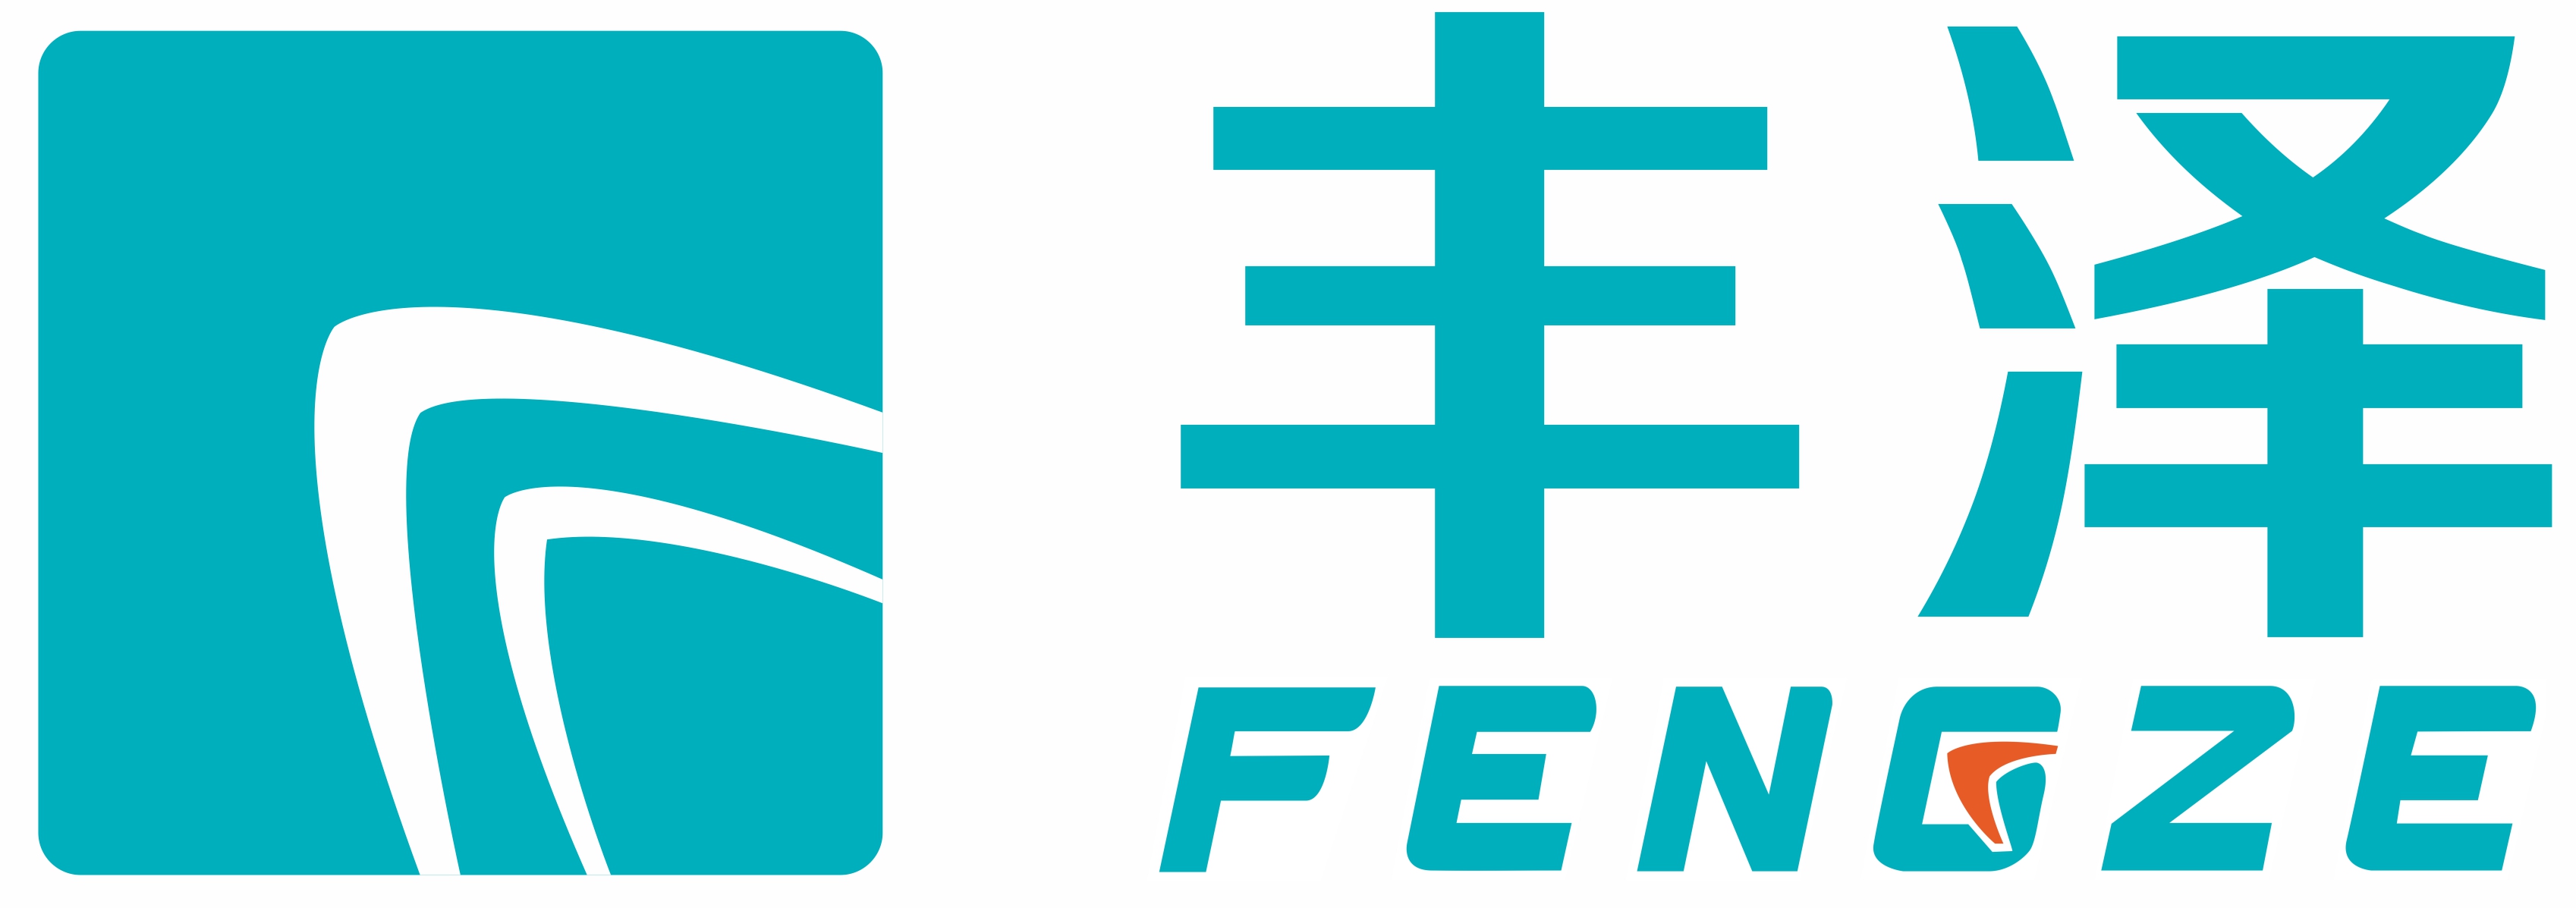 Шаньдун Fengze Yacht Technology Co., Ltd.